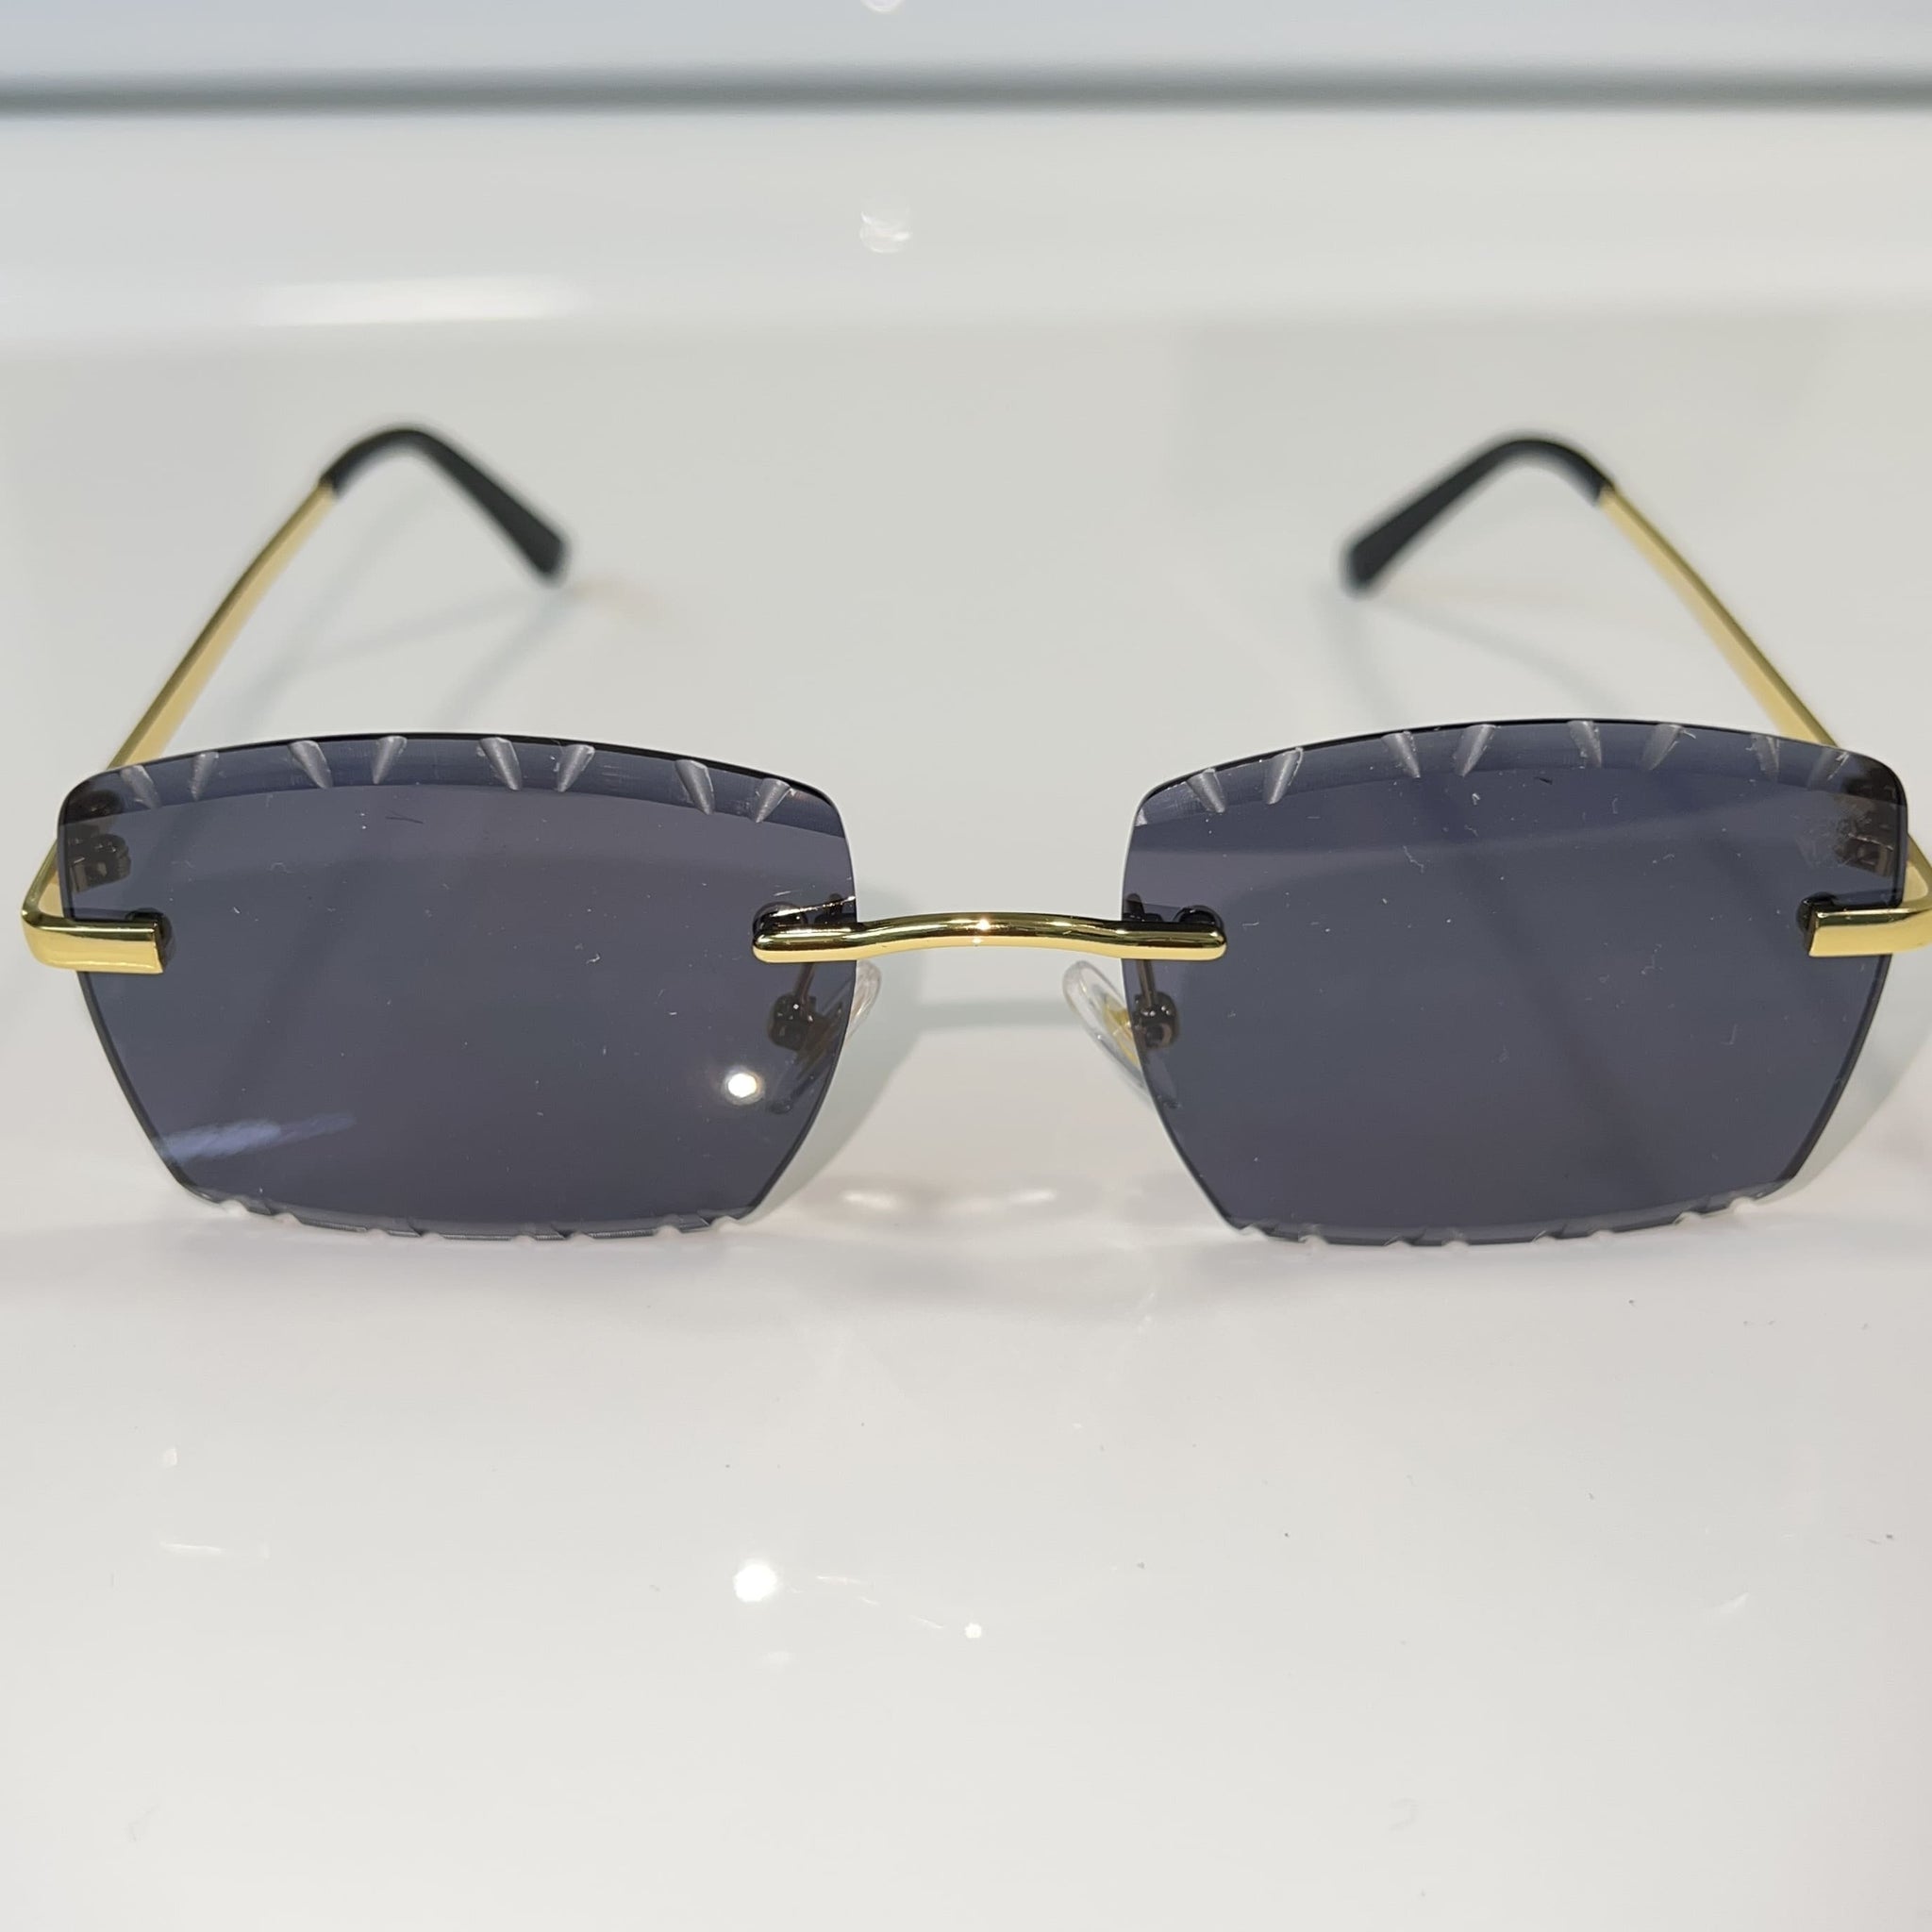 Dripcut Glasses - 14k gold plated - Black Shade - Sehgal Glasses